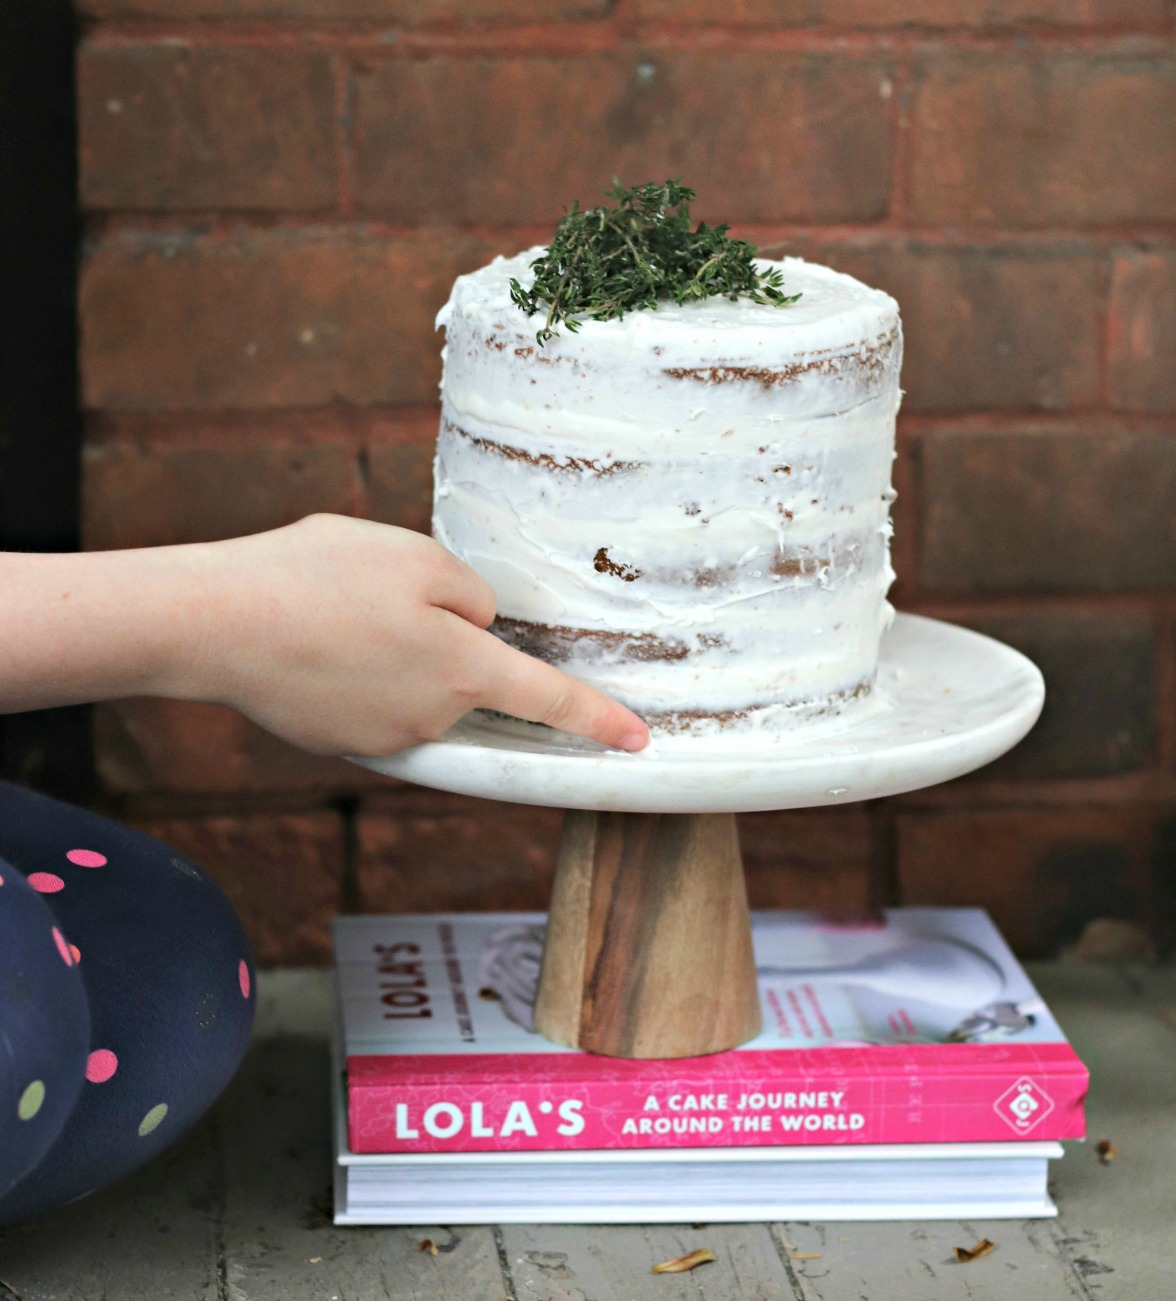 Lola's A Cake Journey Around the World carrot cake swiping